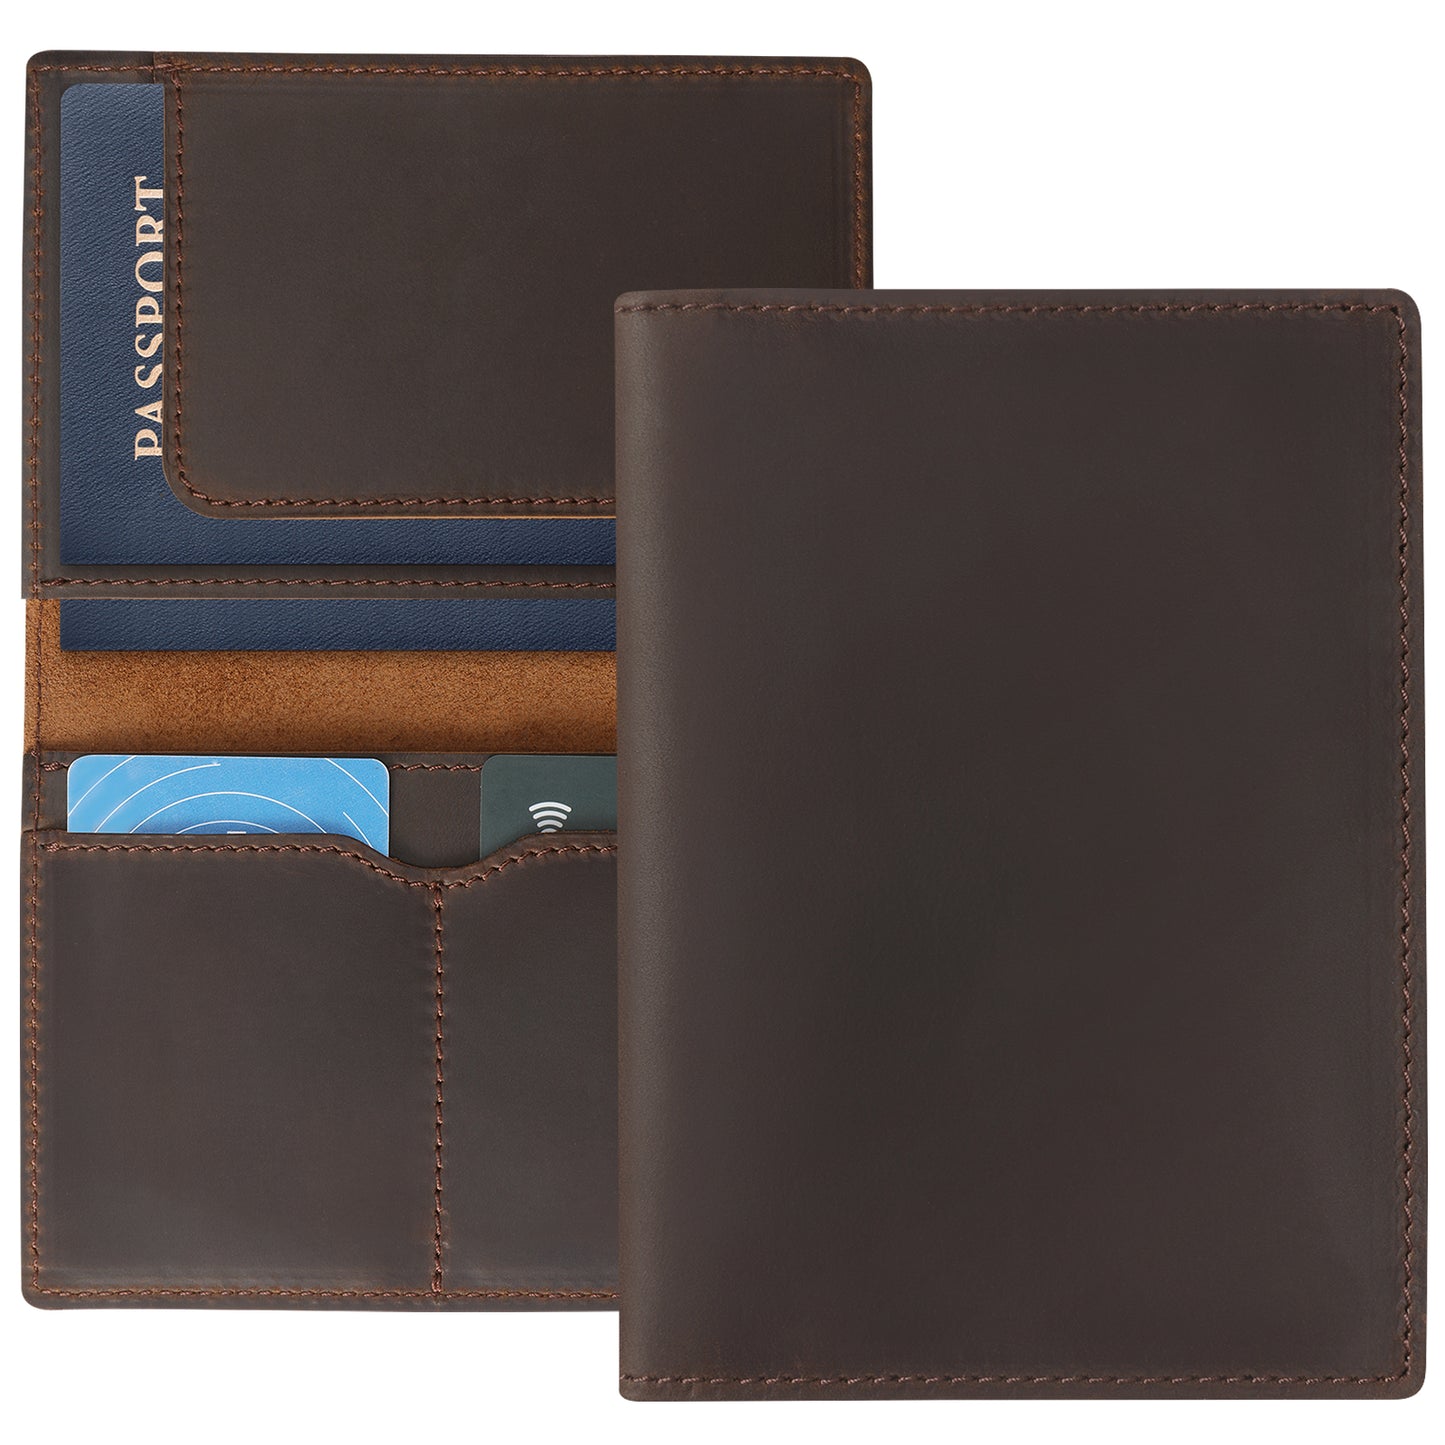 Jack&Chris Leather Passport Holder, Handmade Passport cover, Travel Wallet Cover Case for Men and Women